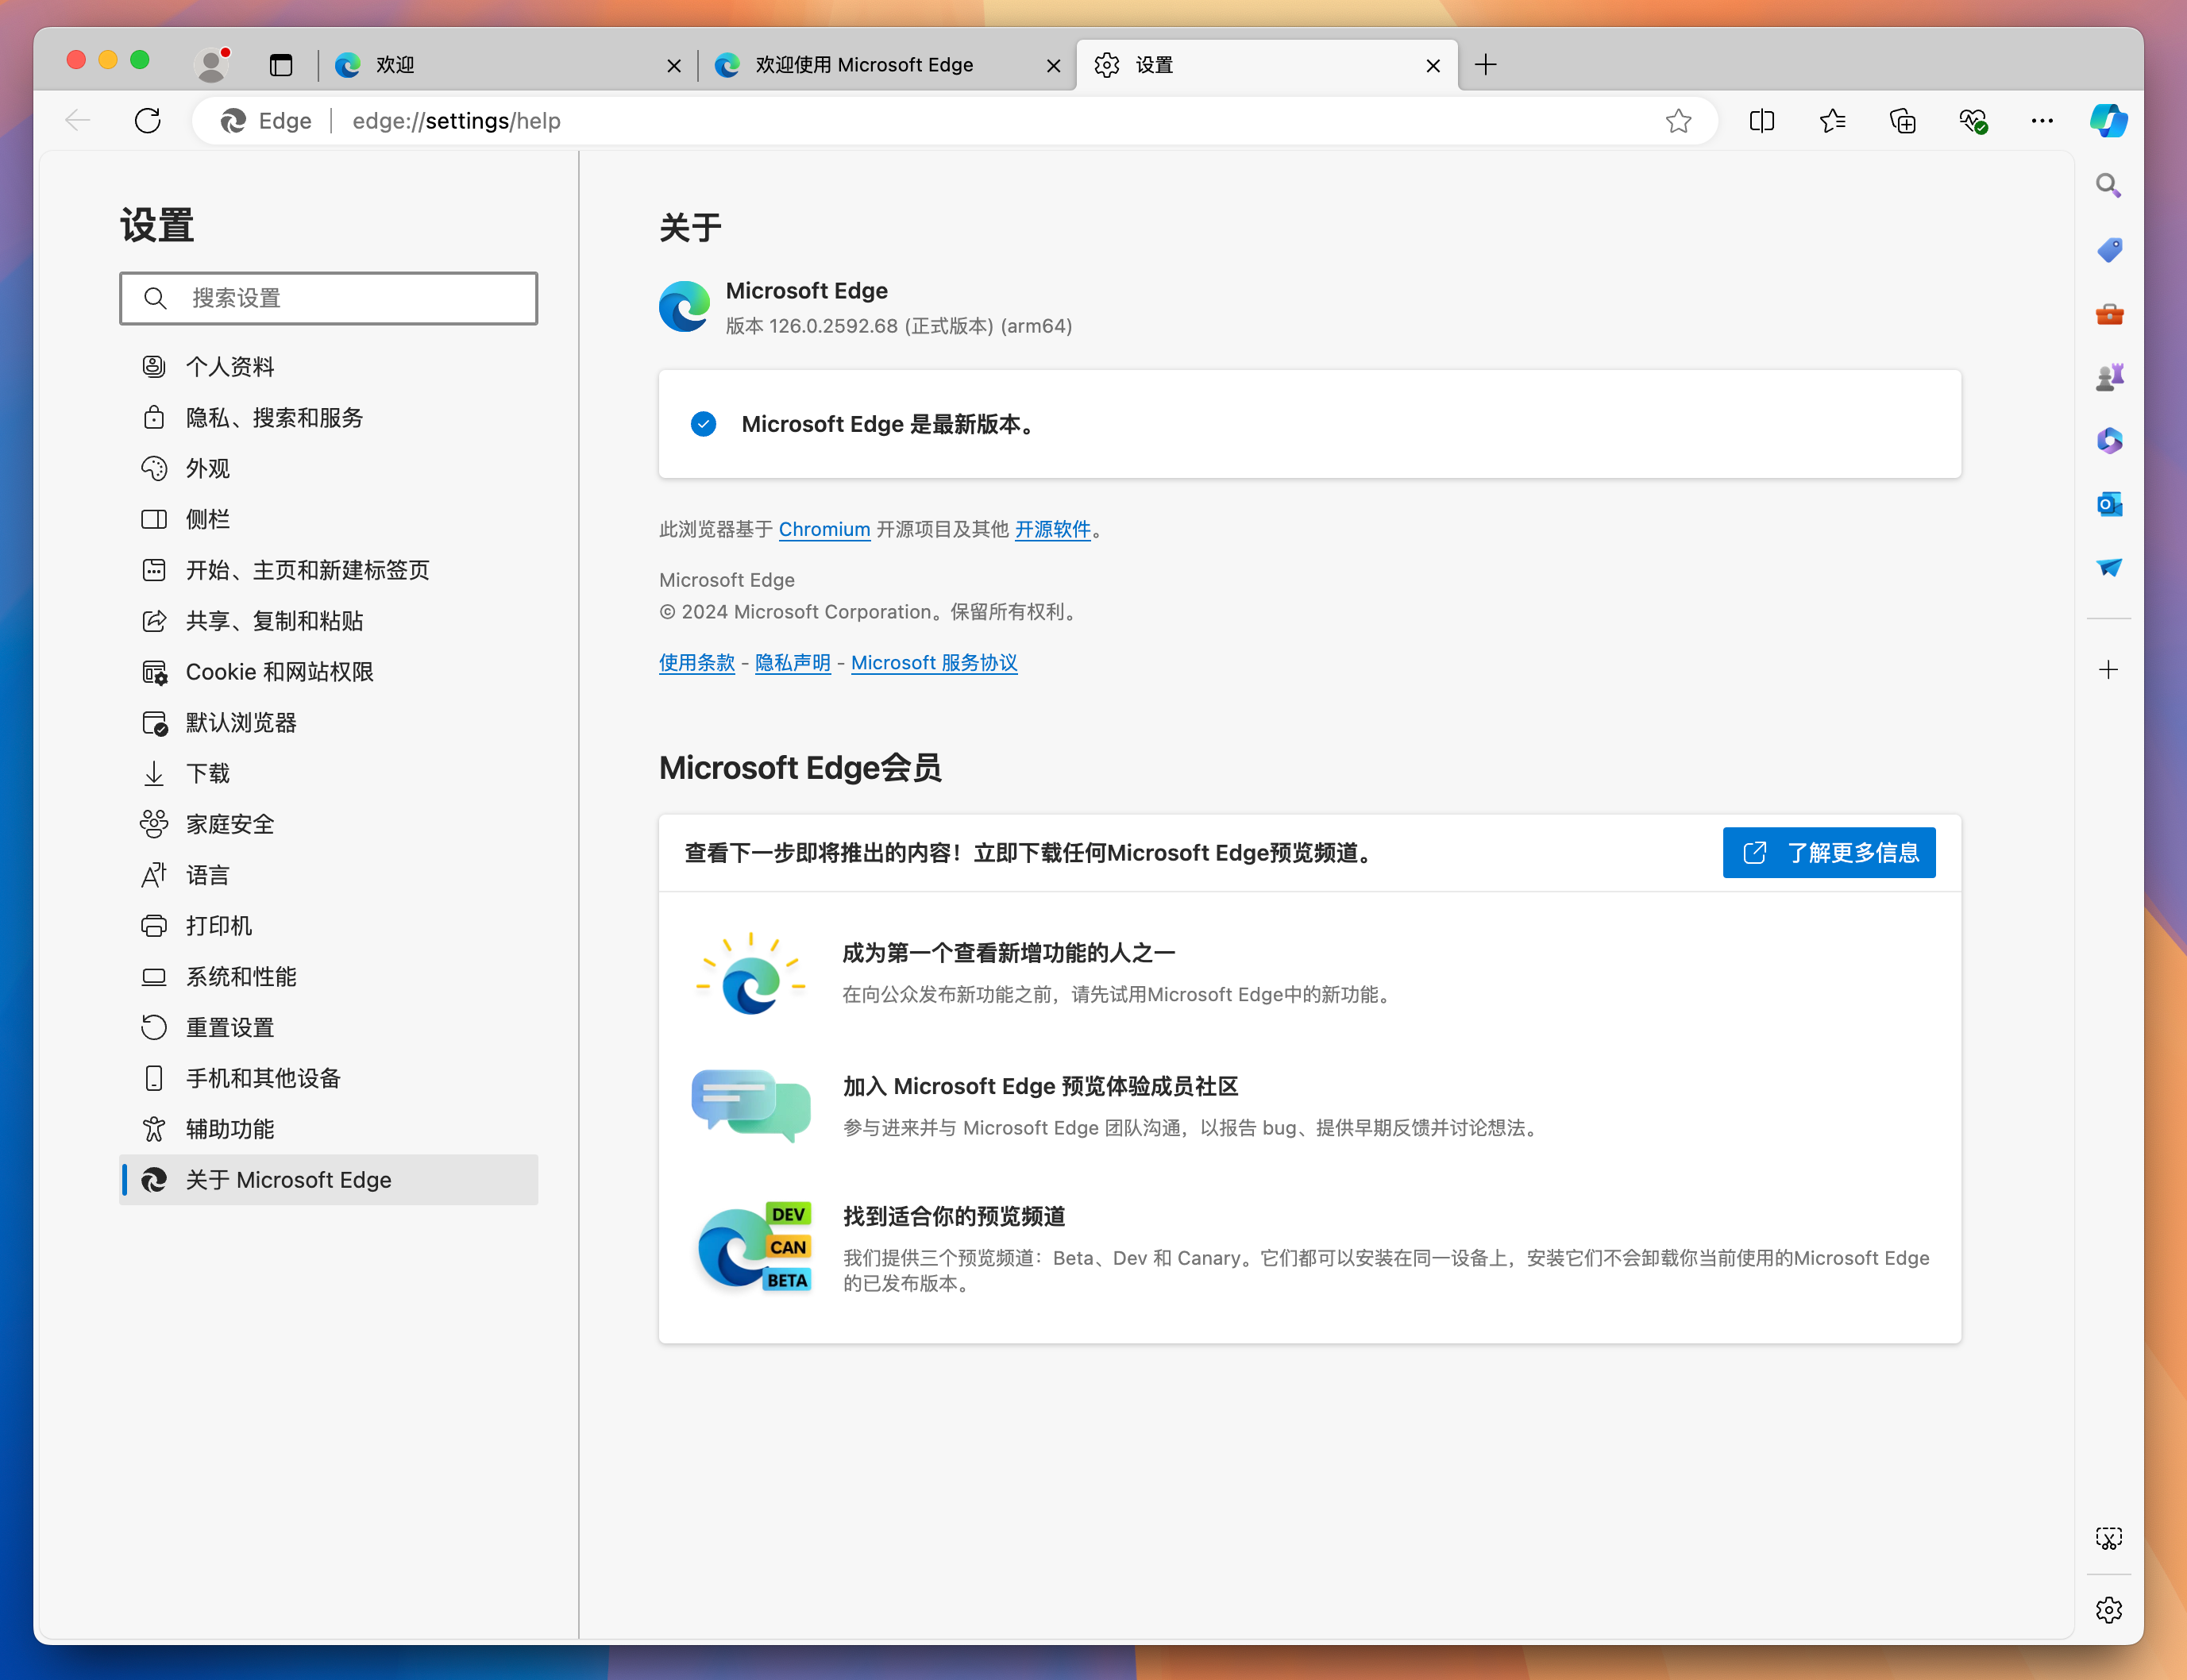 Microsoft Edge for Mac v126.0.2592.68 Edge浏览器 中文正式版 免激活下载-1